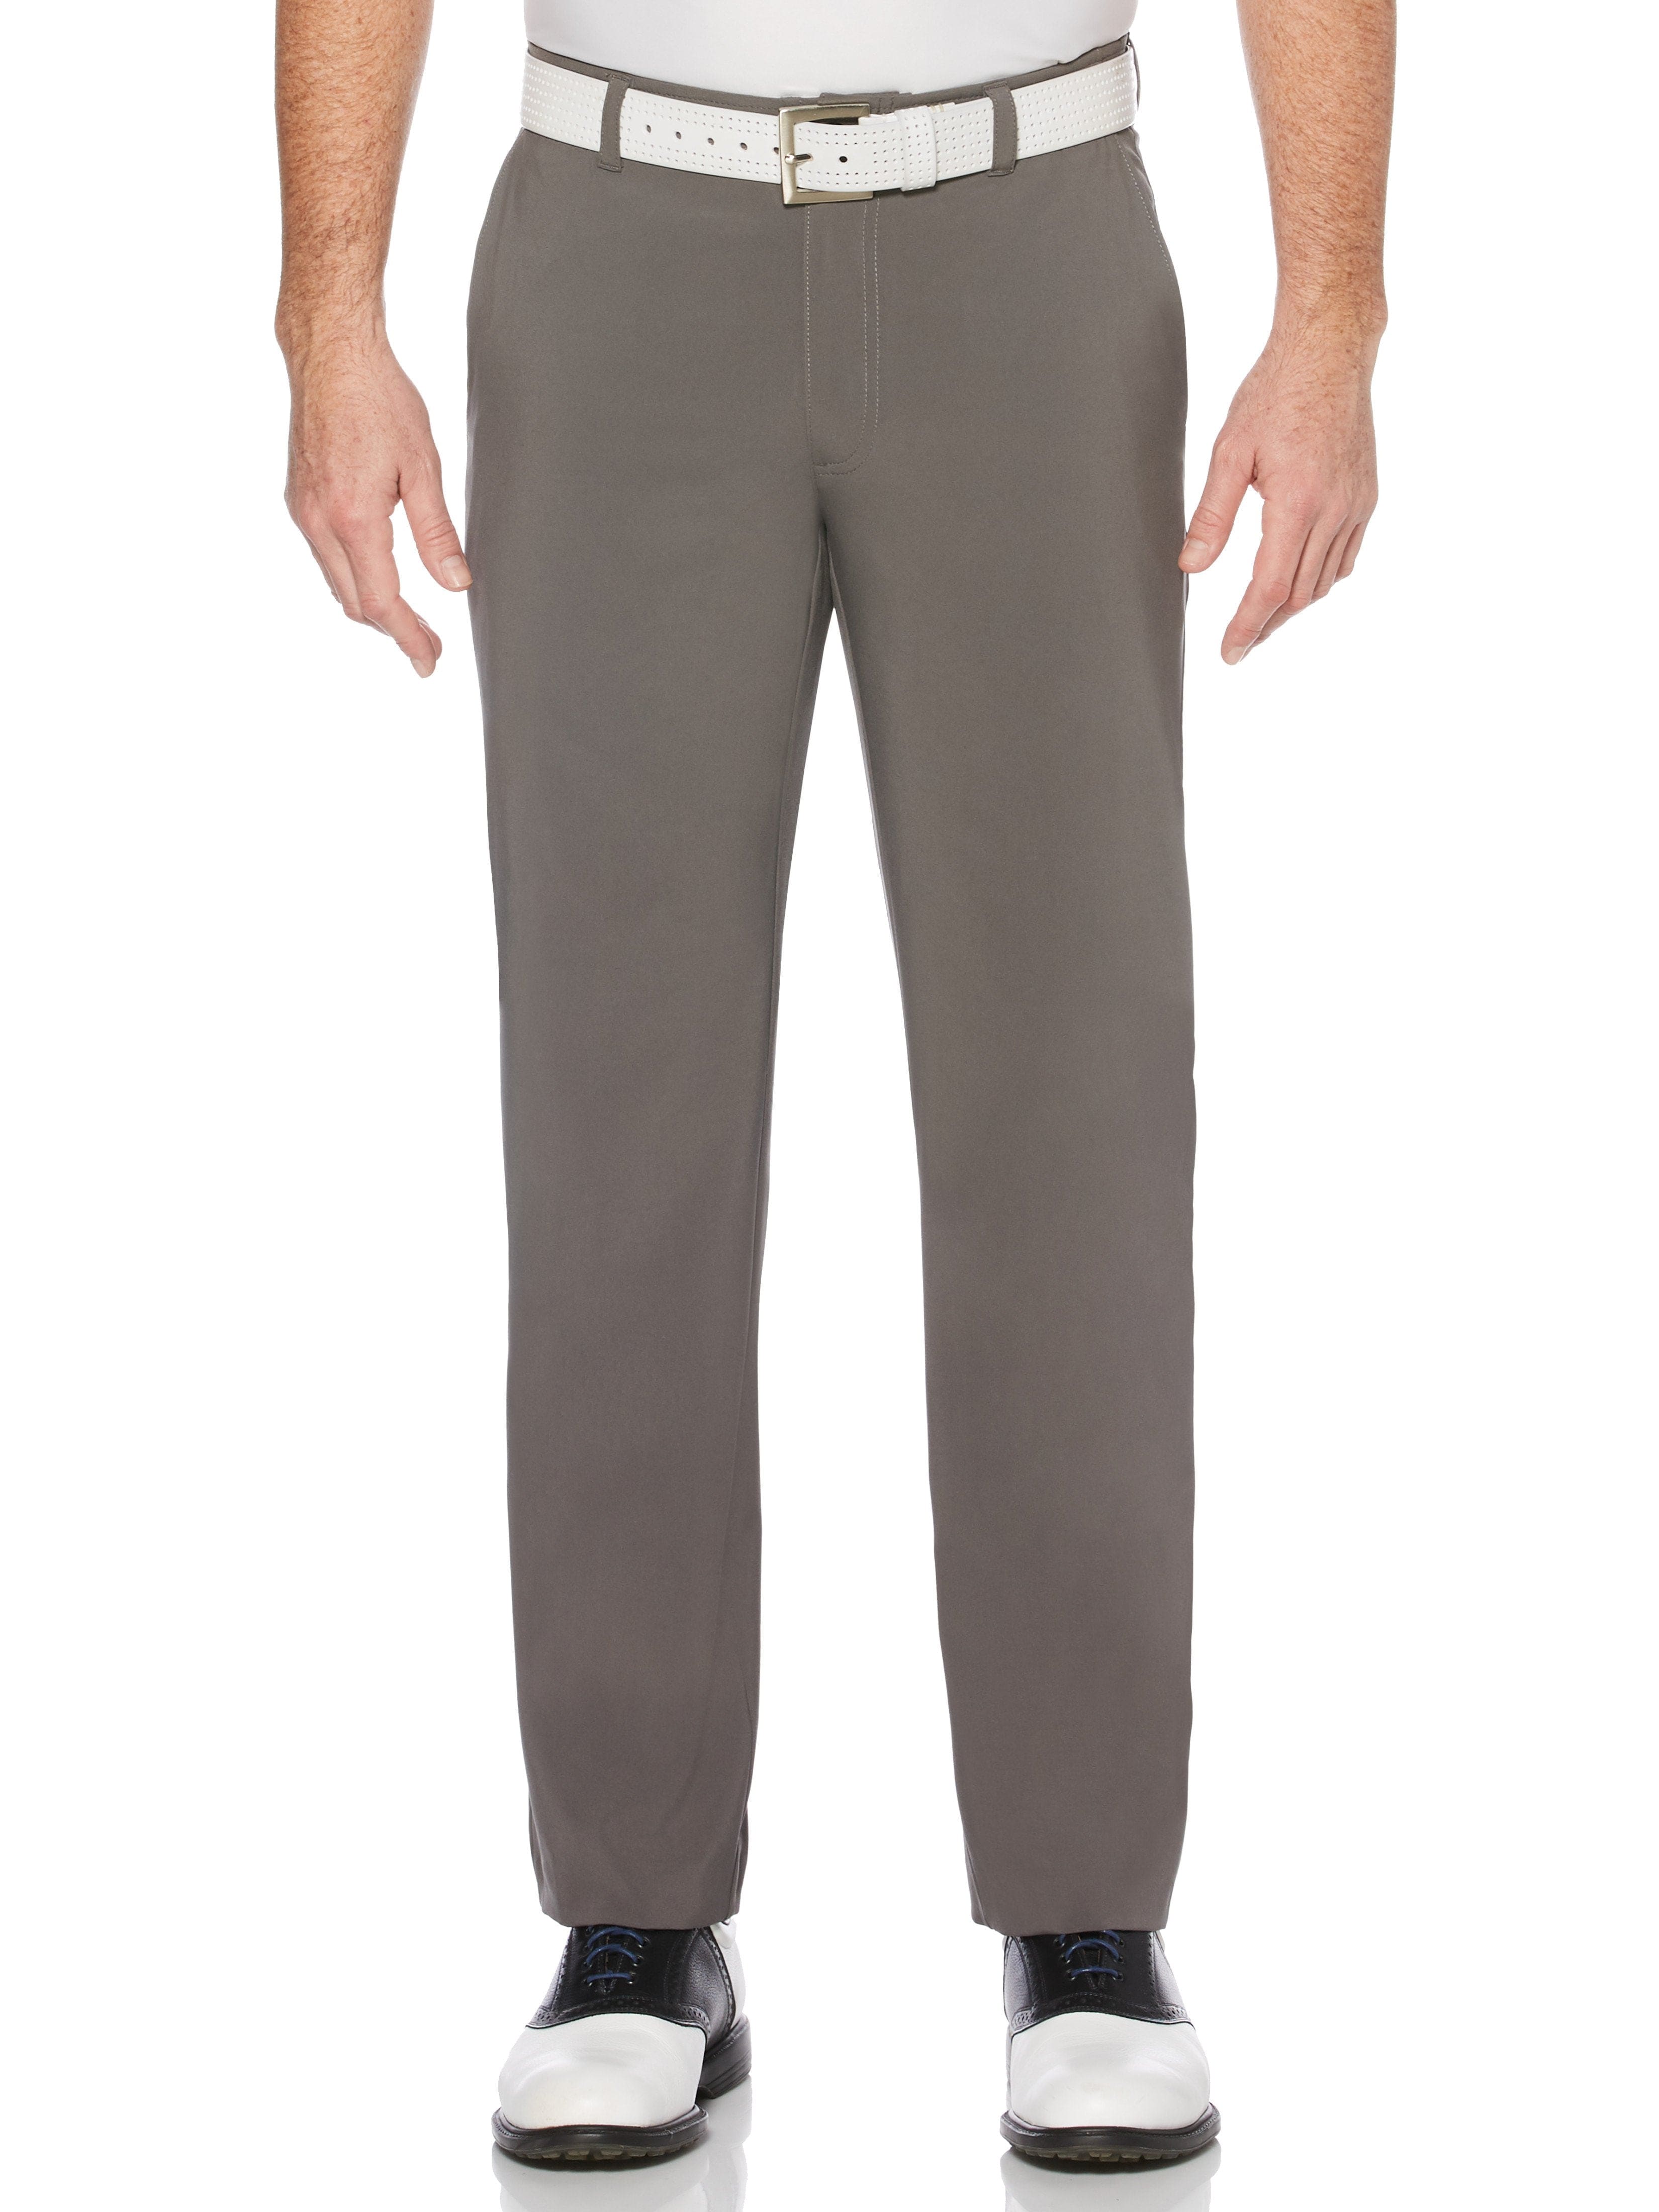 Jack Nicklaus Mens Flat Front Active Flex Pants, Size 40 x 30, Iron Gate Gray, Polyester/Elastane | Golf Apparel Shop